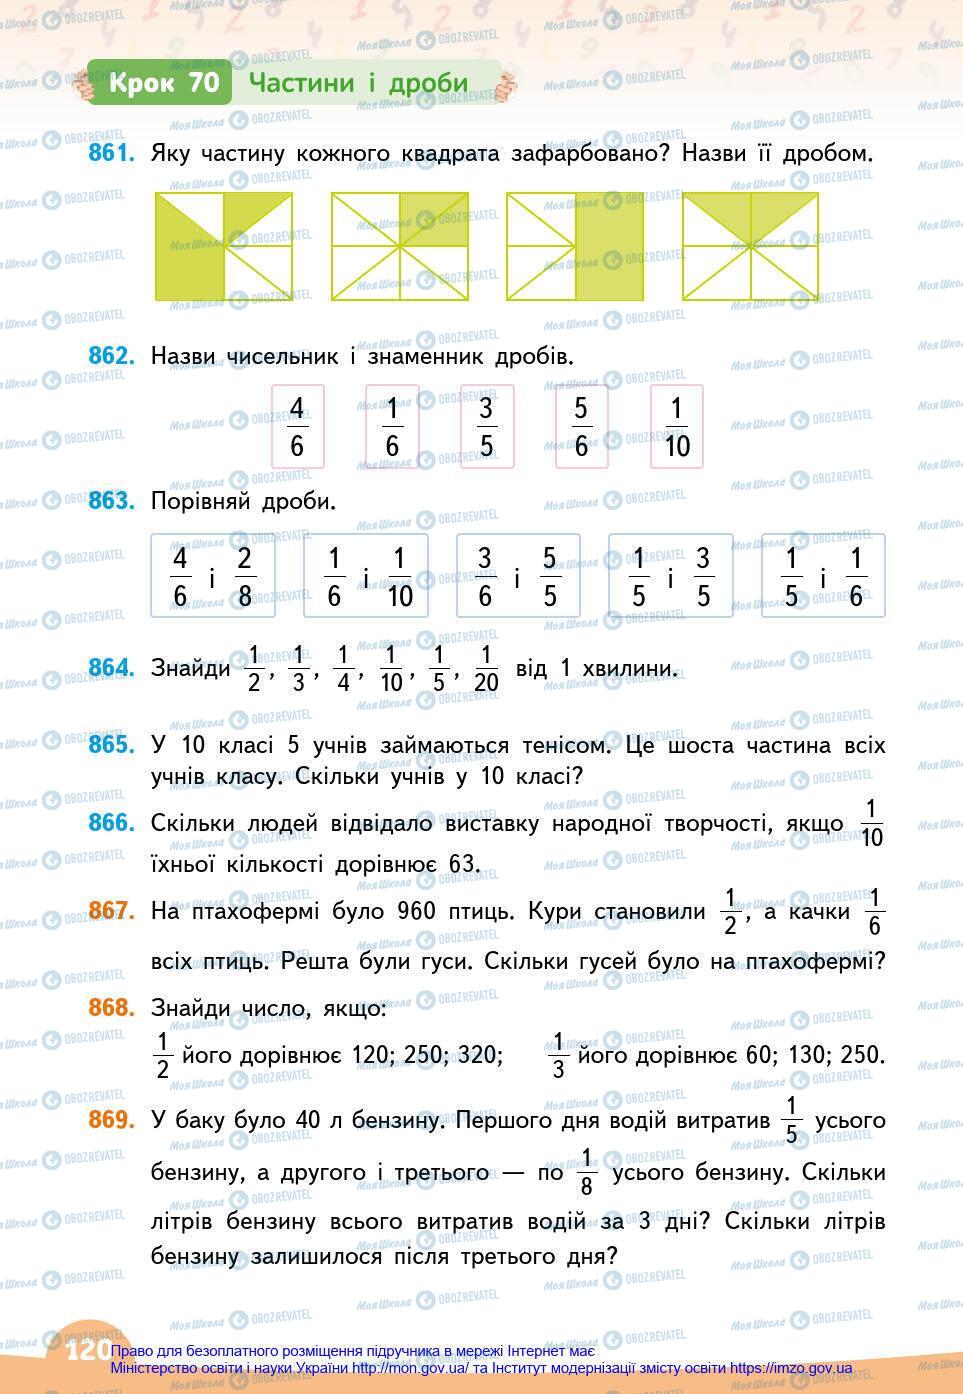 Учебники Математика 3 класс страница 120